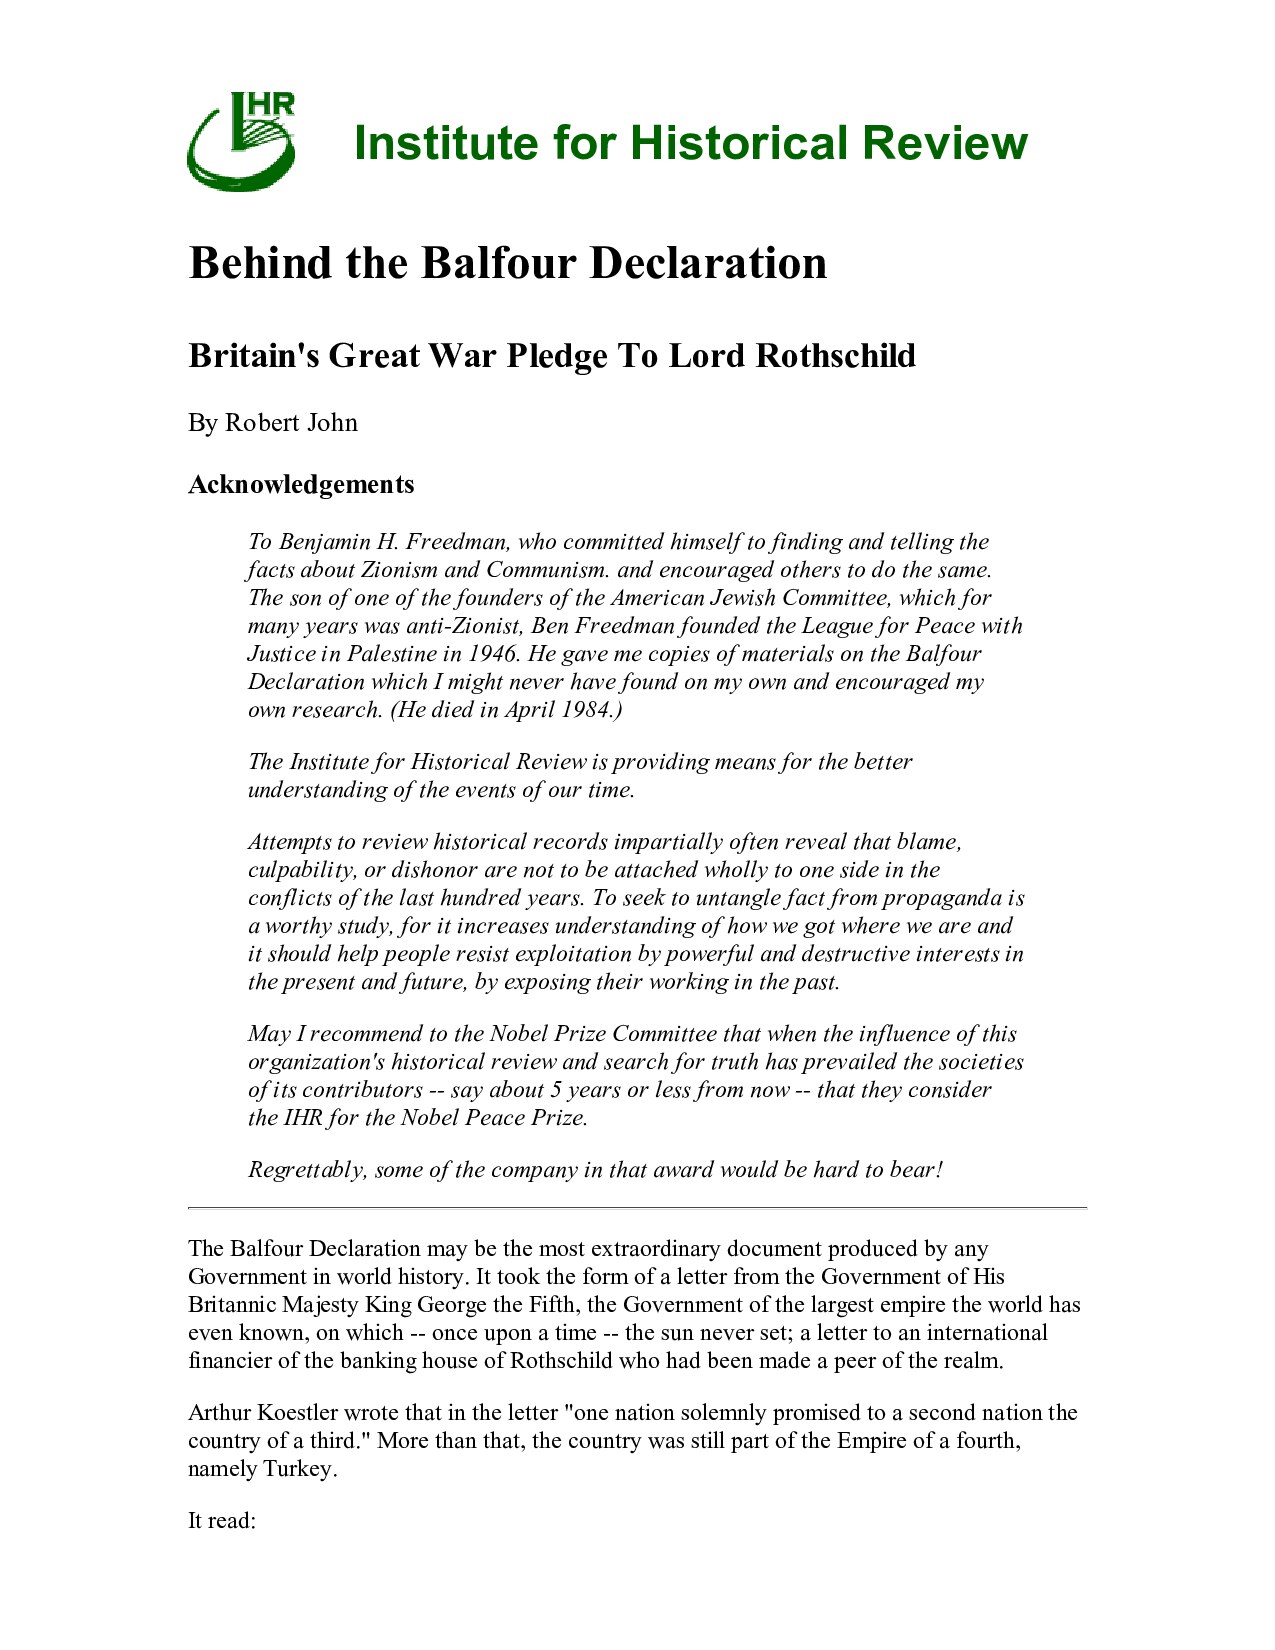 Behind the Balfour Declaration: Britain's Great War Pledge To Lord Rothschild